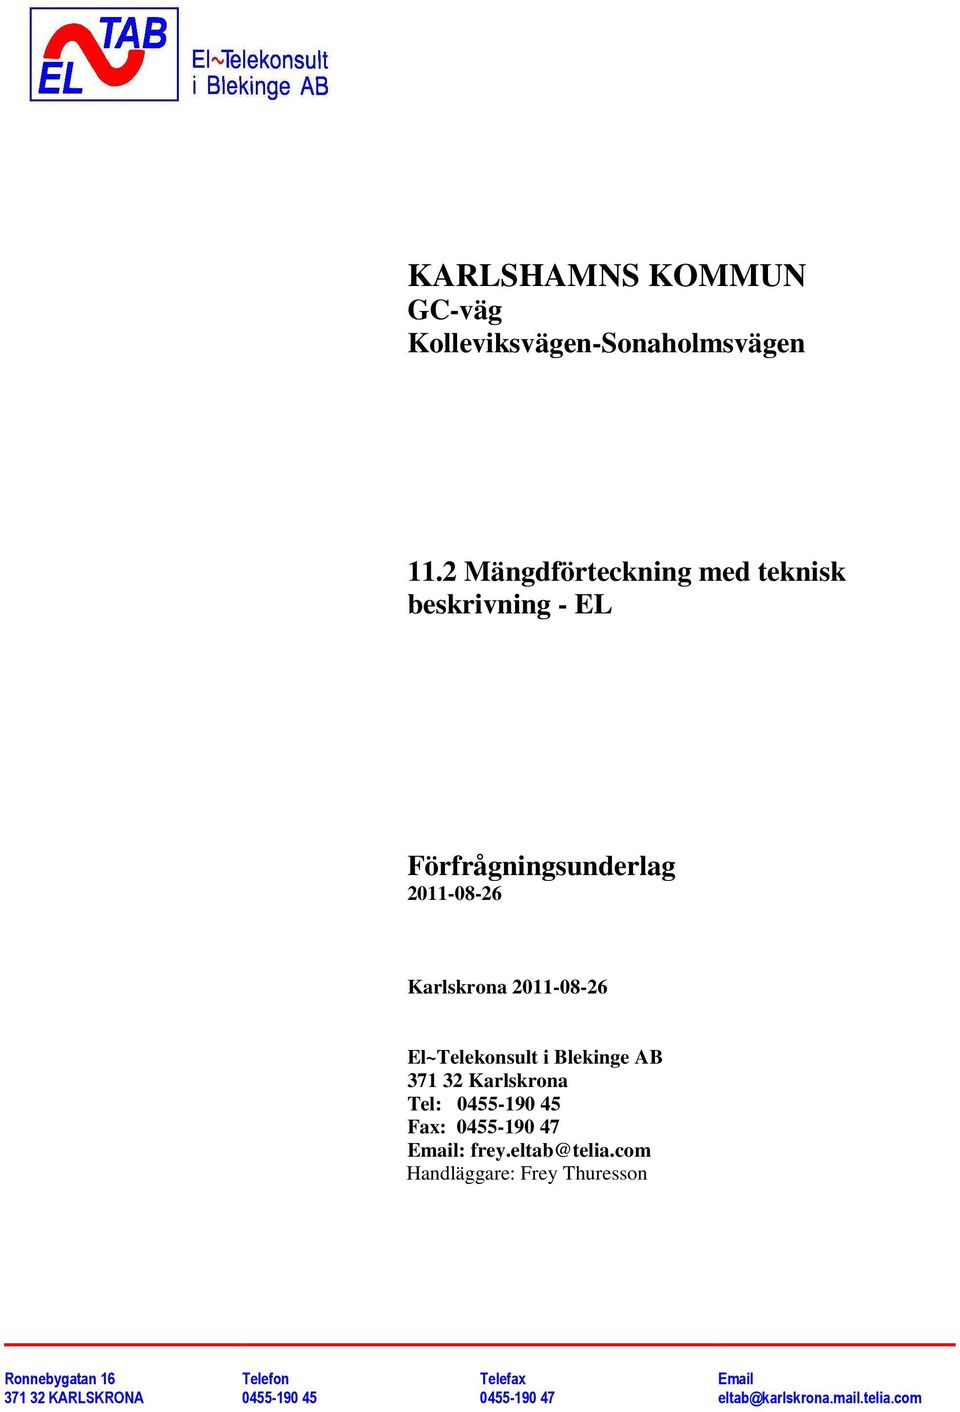 El~Telekonsult i Blekinge AB 371 32 Karlskrona Tel: 0455-190 45 Fax: 0455-190 47 Email: frey.